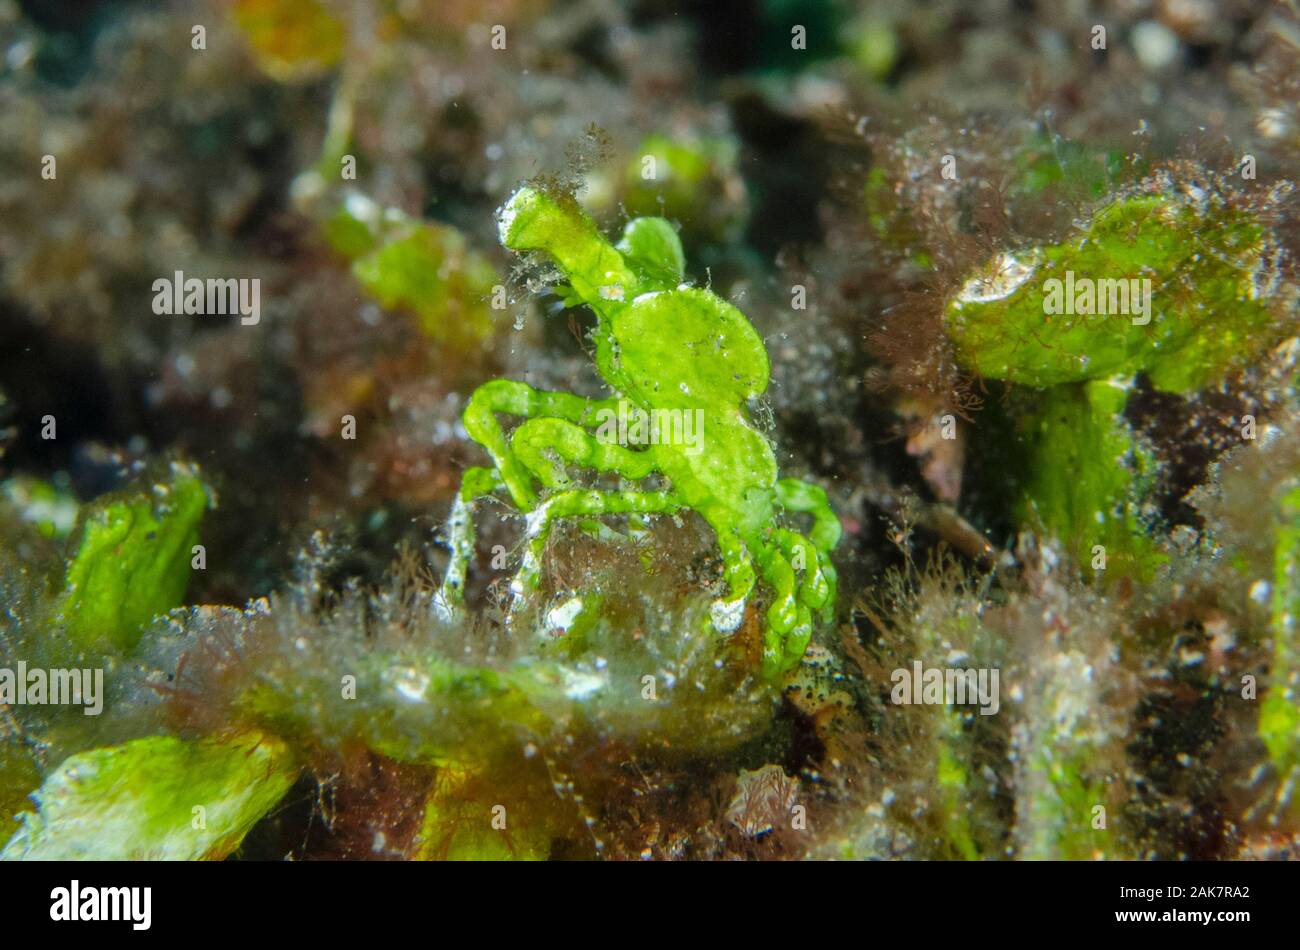 Green Arrowhead Crab, Huenia heraldica, Epialtidae Family, Monkey Reef dive site, Tulamben, Bali, Indonesia, Indian Ocean Stock Photo